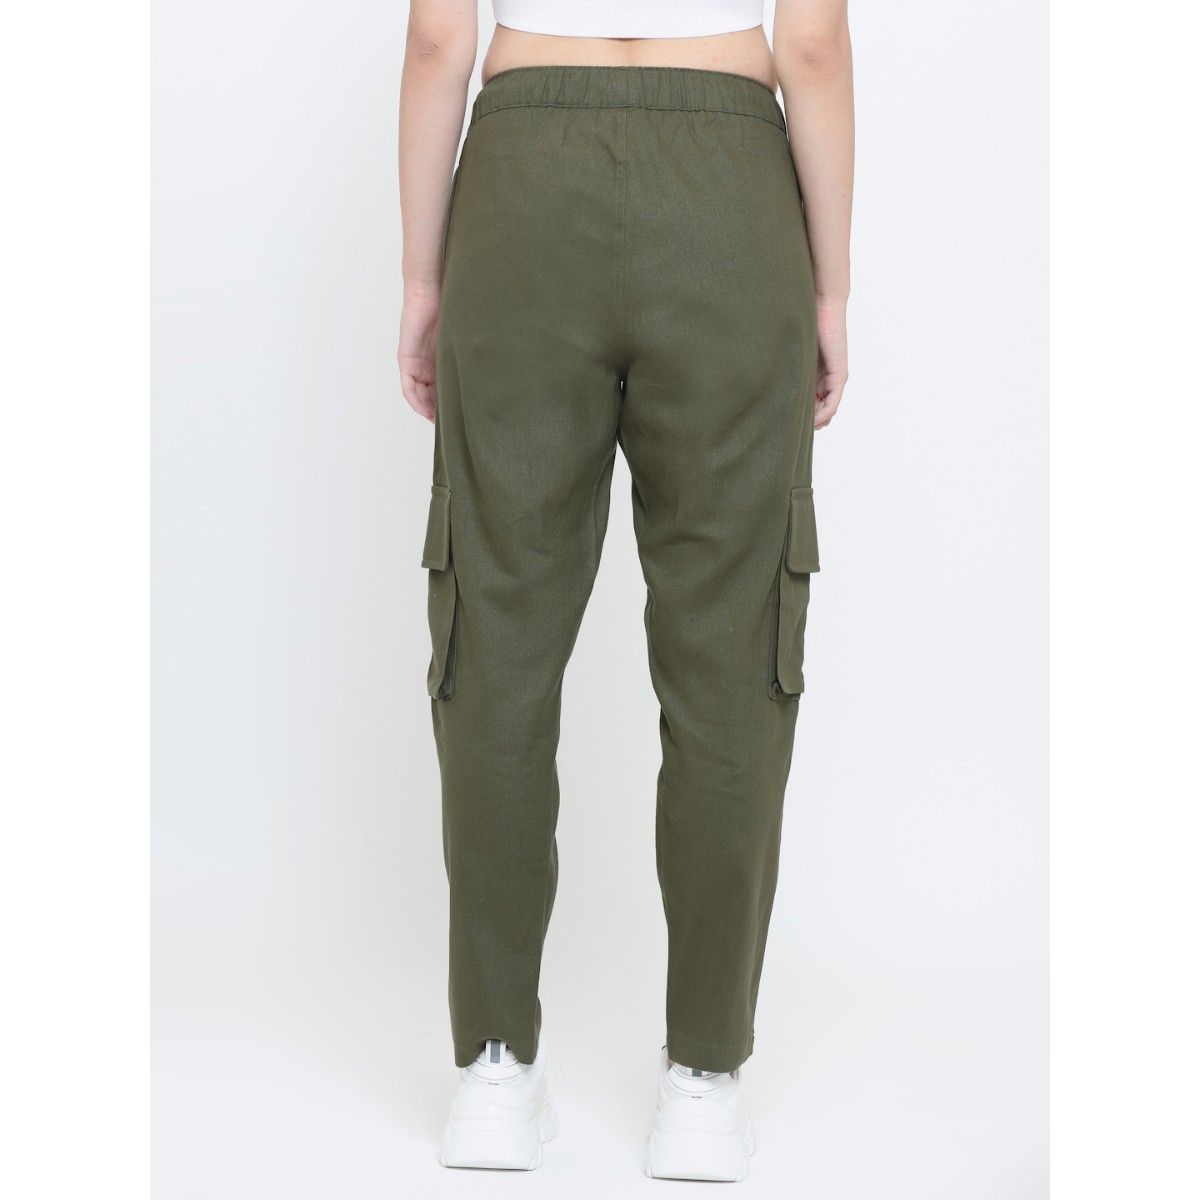 Cargo Pants  High Waisted  Full Length  Military Green